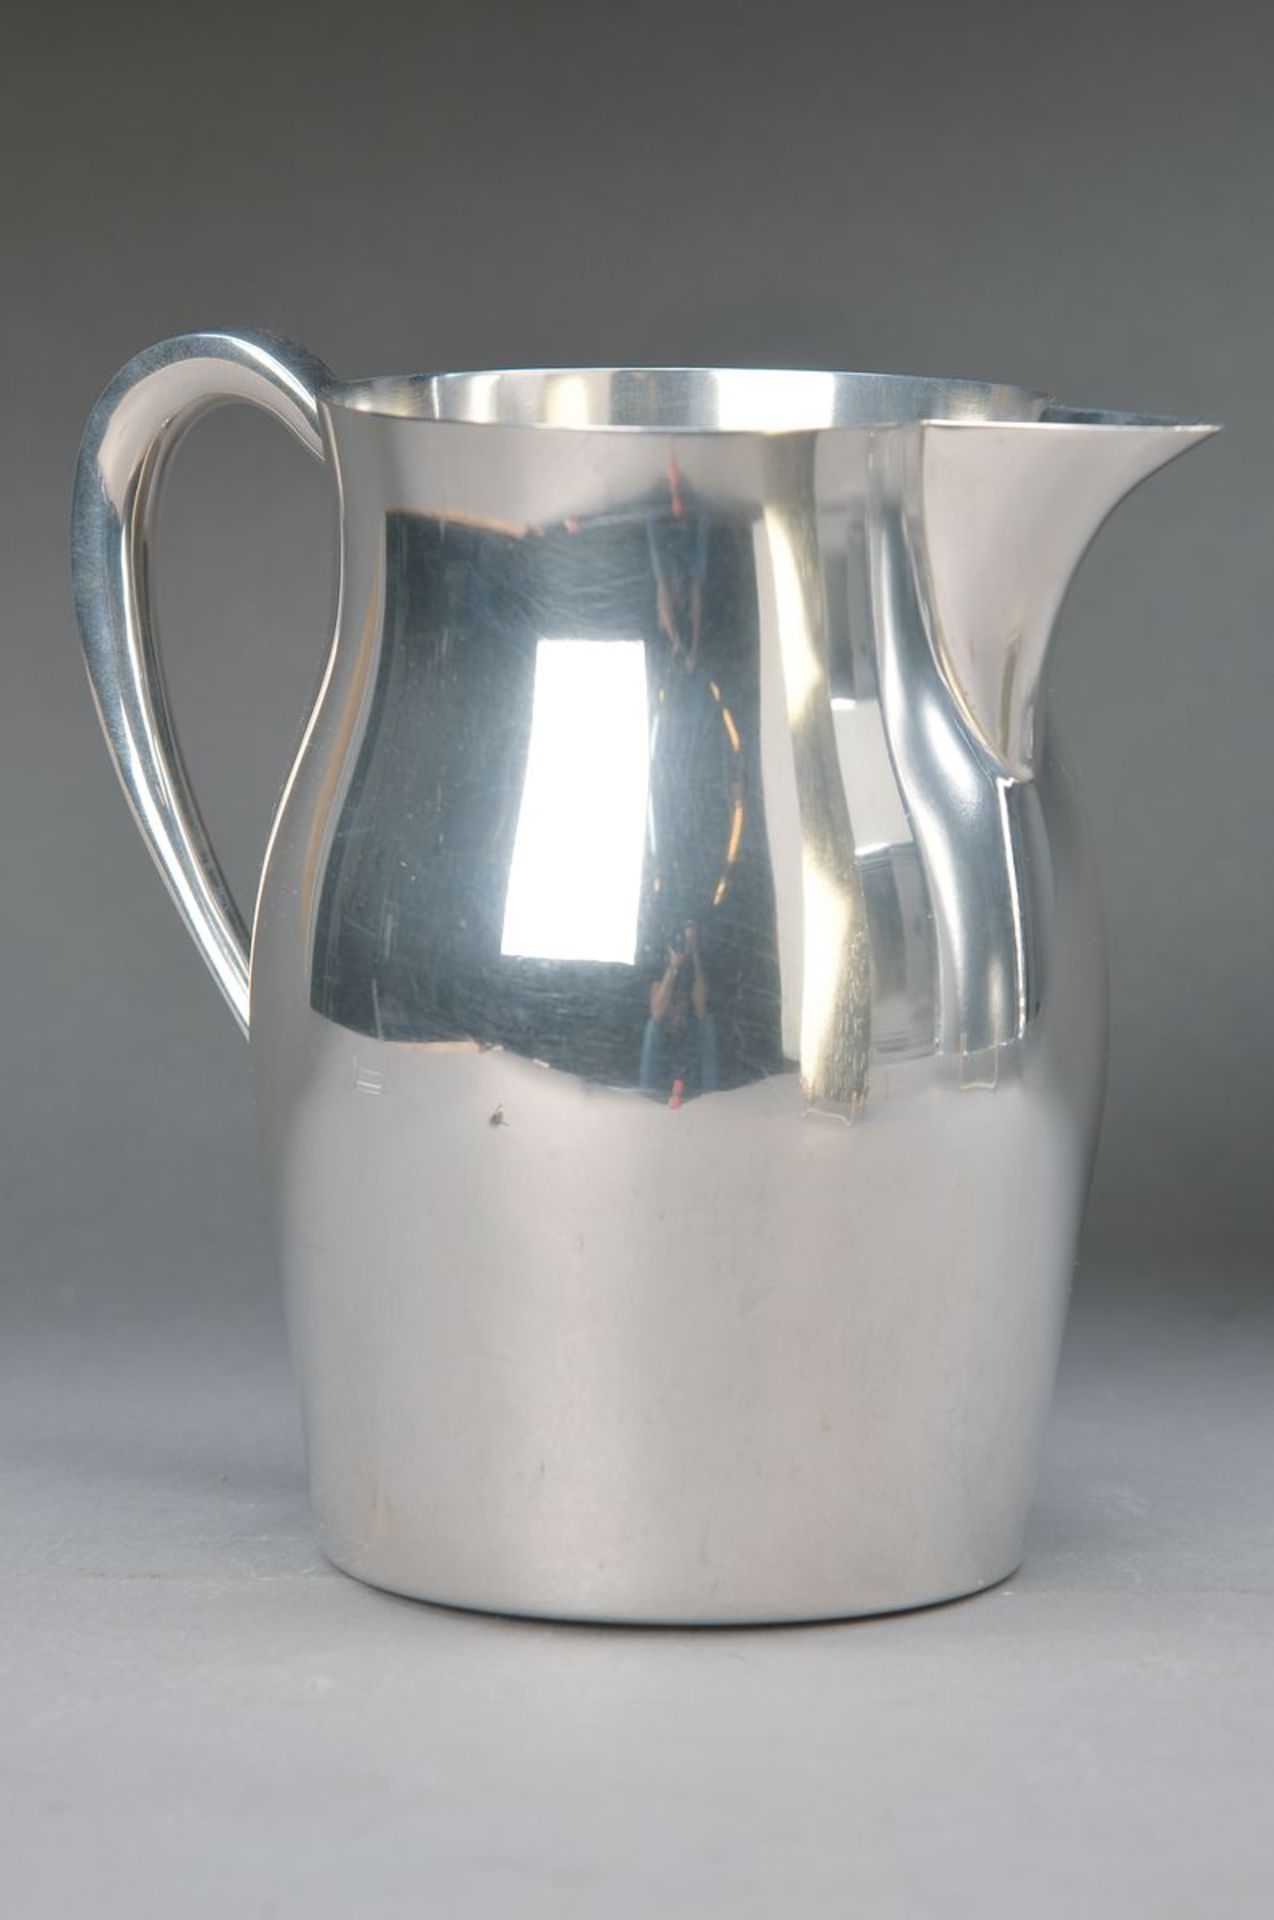 Krug, USA, 1960er Jahre, 925er Sterling Silber, Modell nach Paul Revere, glatte elegante Form, H.